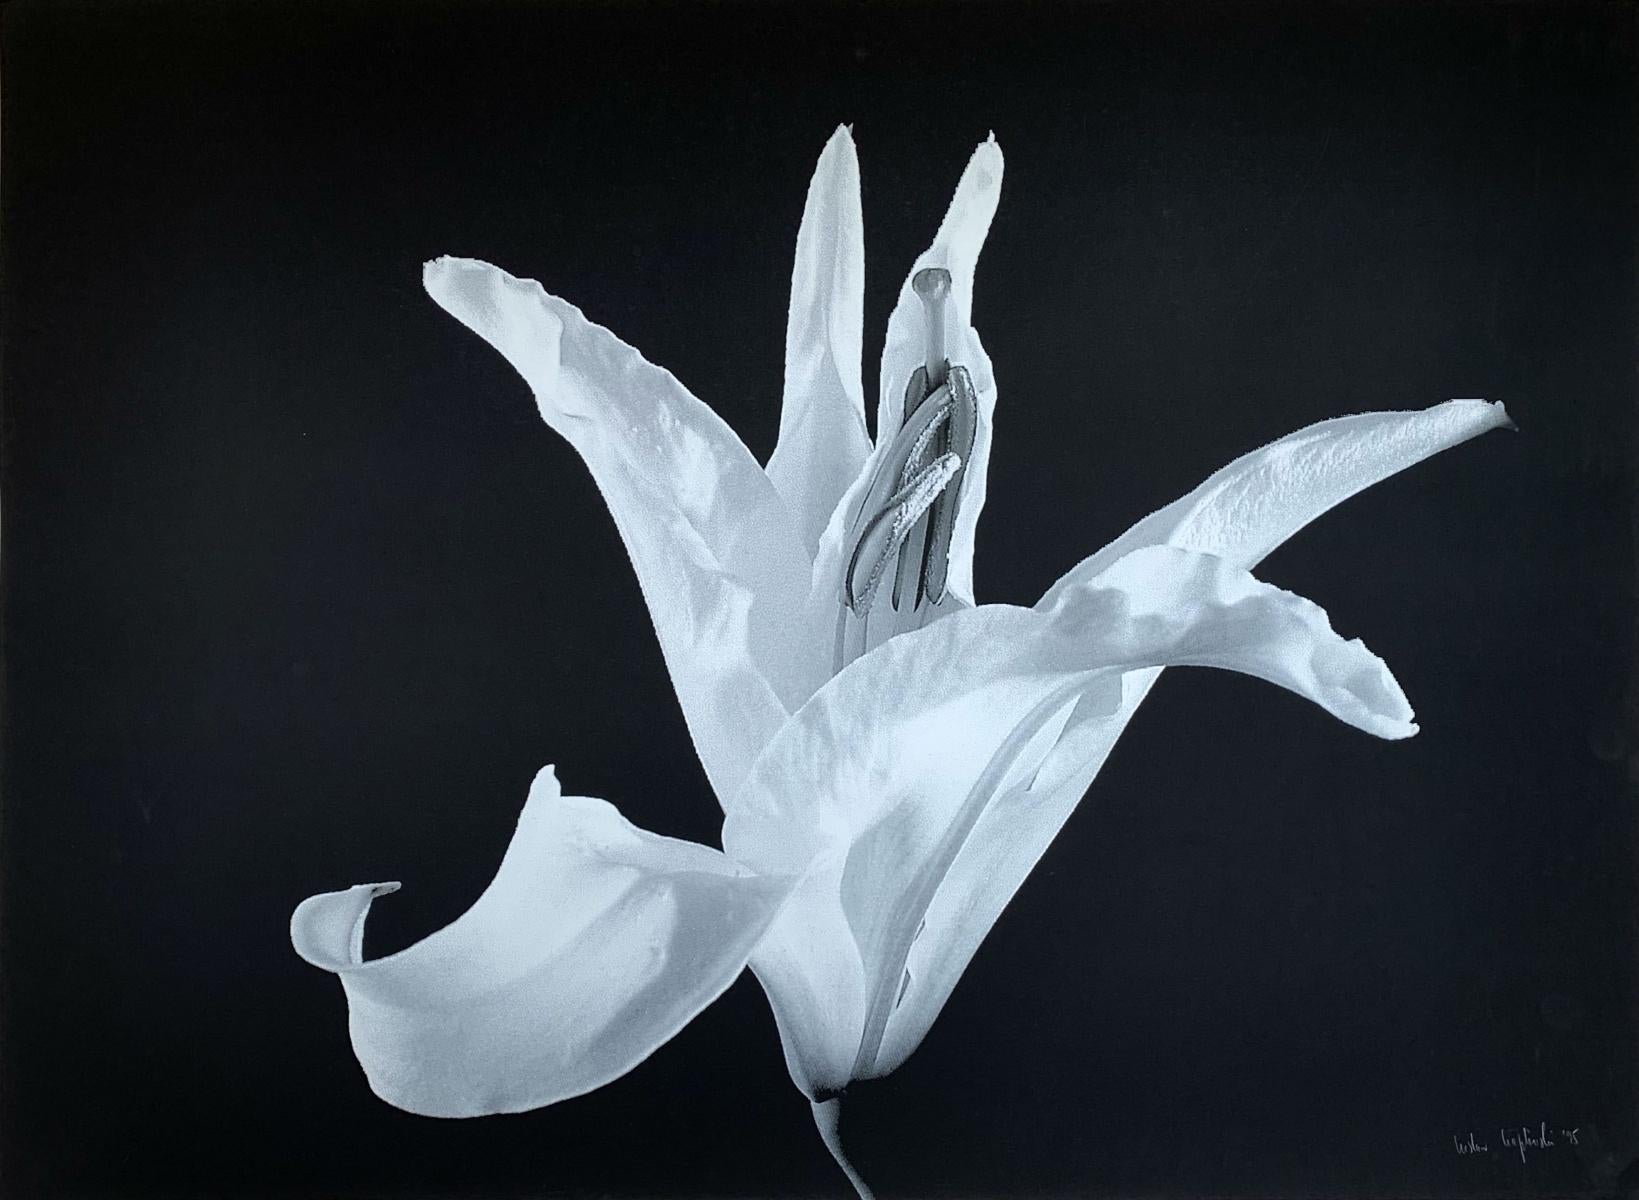 Czeslaw Czaplinski Still-Life Photograph - A lily. Photo on matte paper, Still life, Floral, Black & White, Polish artist